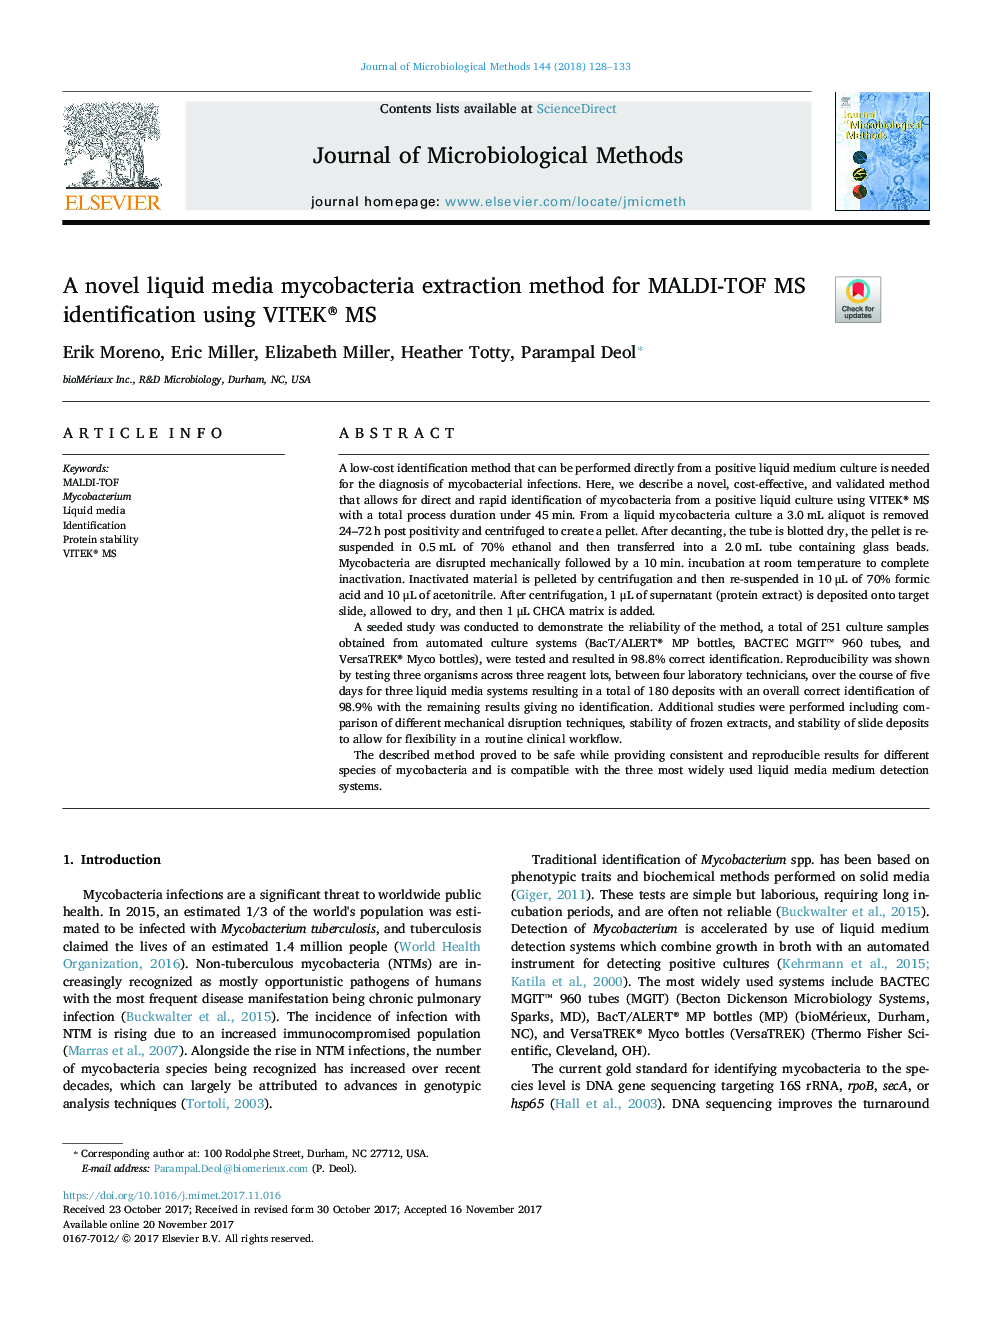 A novel liquid media mycobacteria extraction method for MALDI-TOF MS identification using VITEK® MS